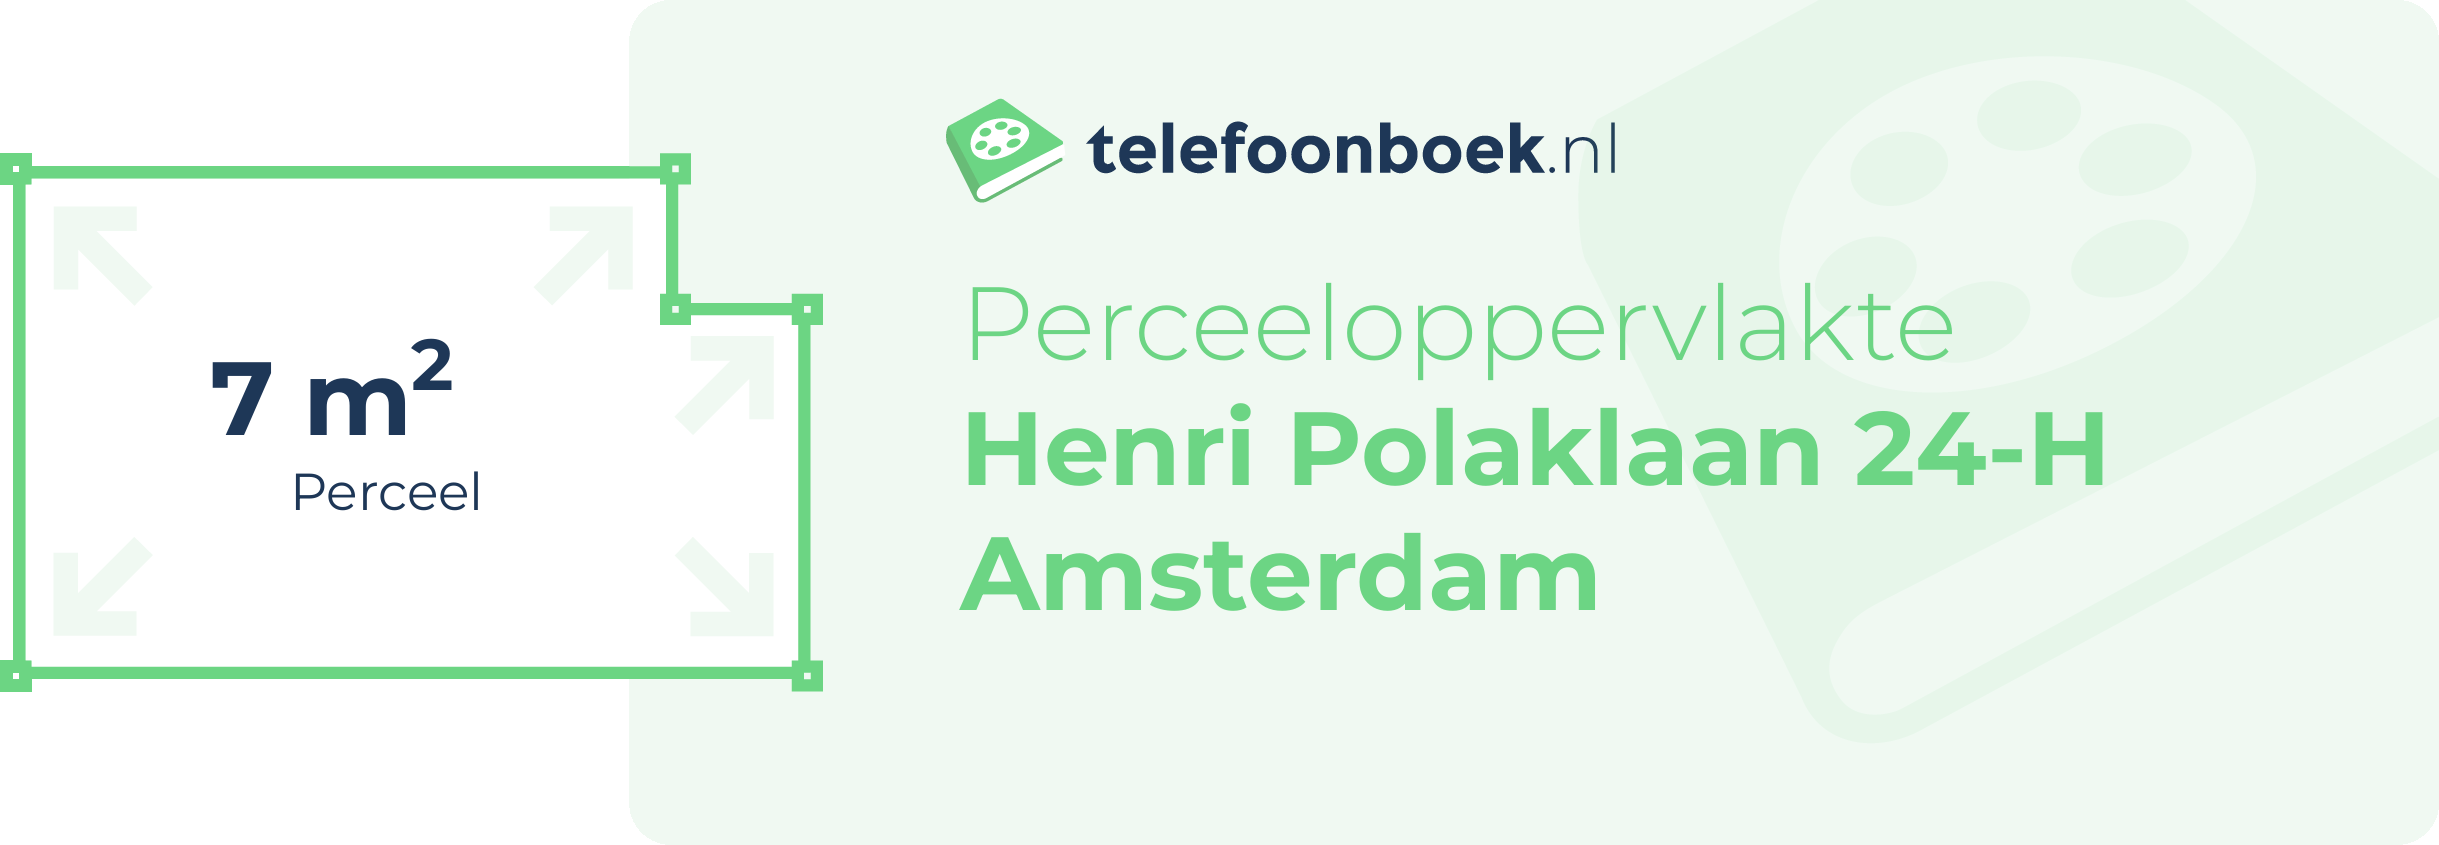 Perceeloppervlakte Henri Polaklaan 24-H Amsterdam